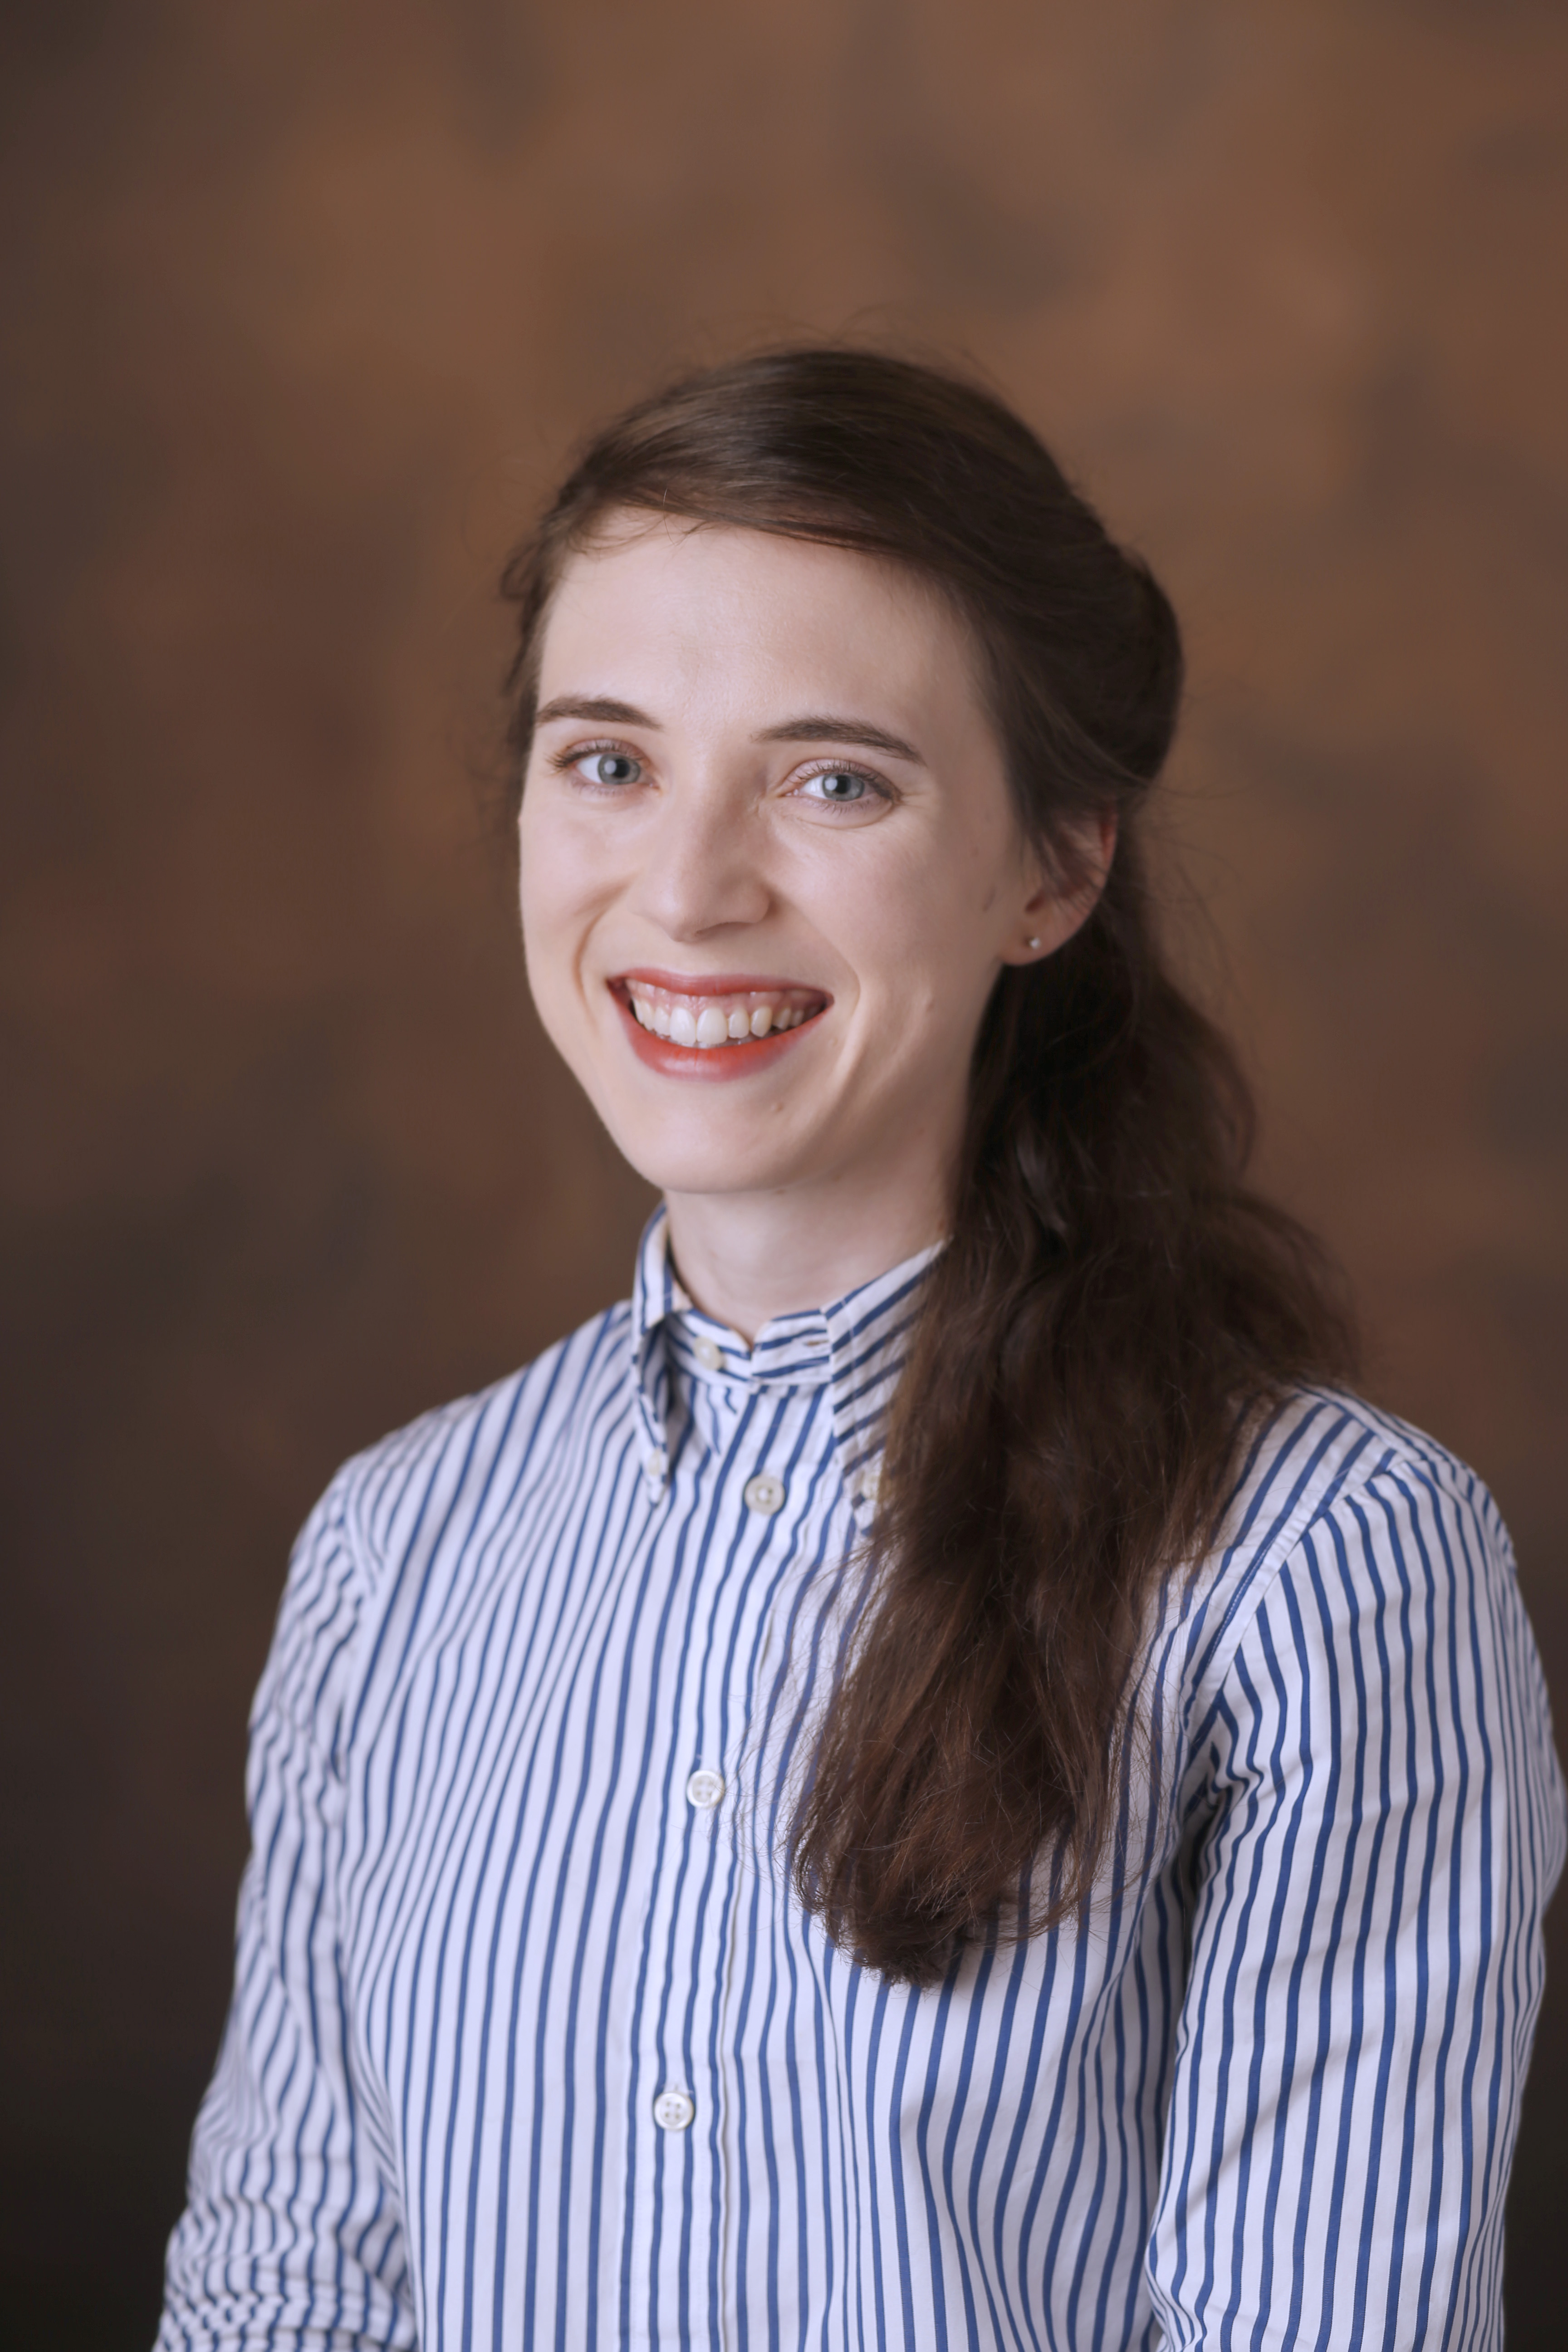 9-14-2018 - Photos of Lauren C. Ruth, Research Assist. Professor in the Math Dept. in A&S (Vanderbilt University / Steve Green)